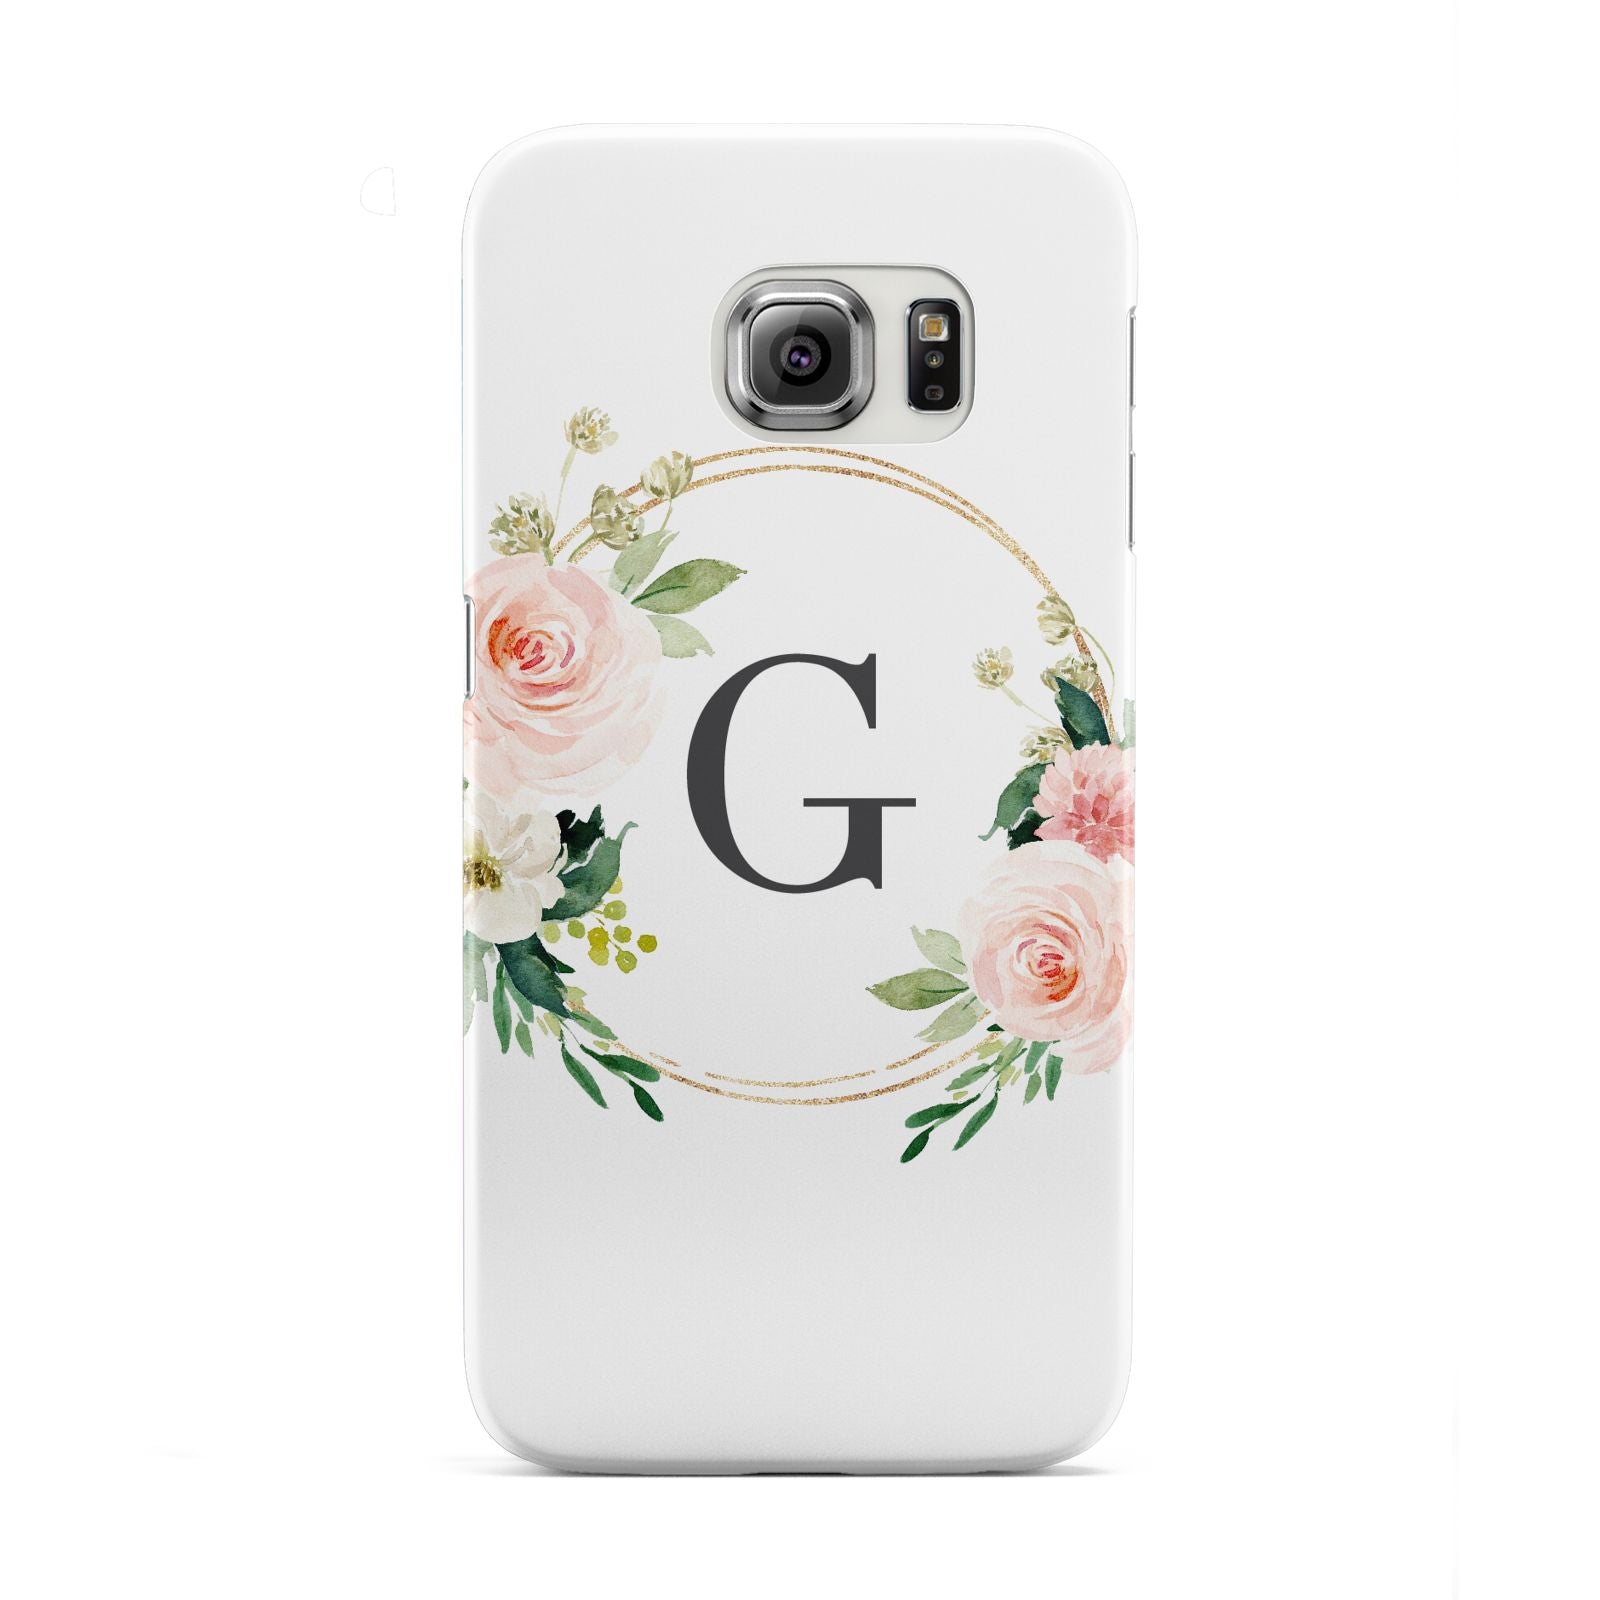 Personalised Blush Floral Wreath Samsung Galaxy S6 Edge Case